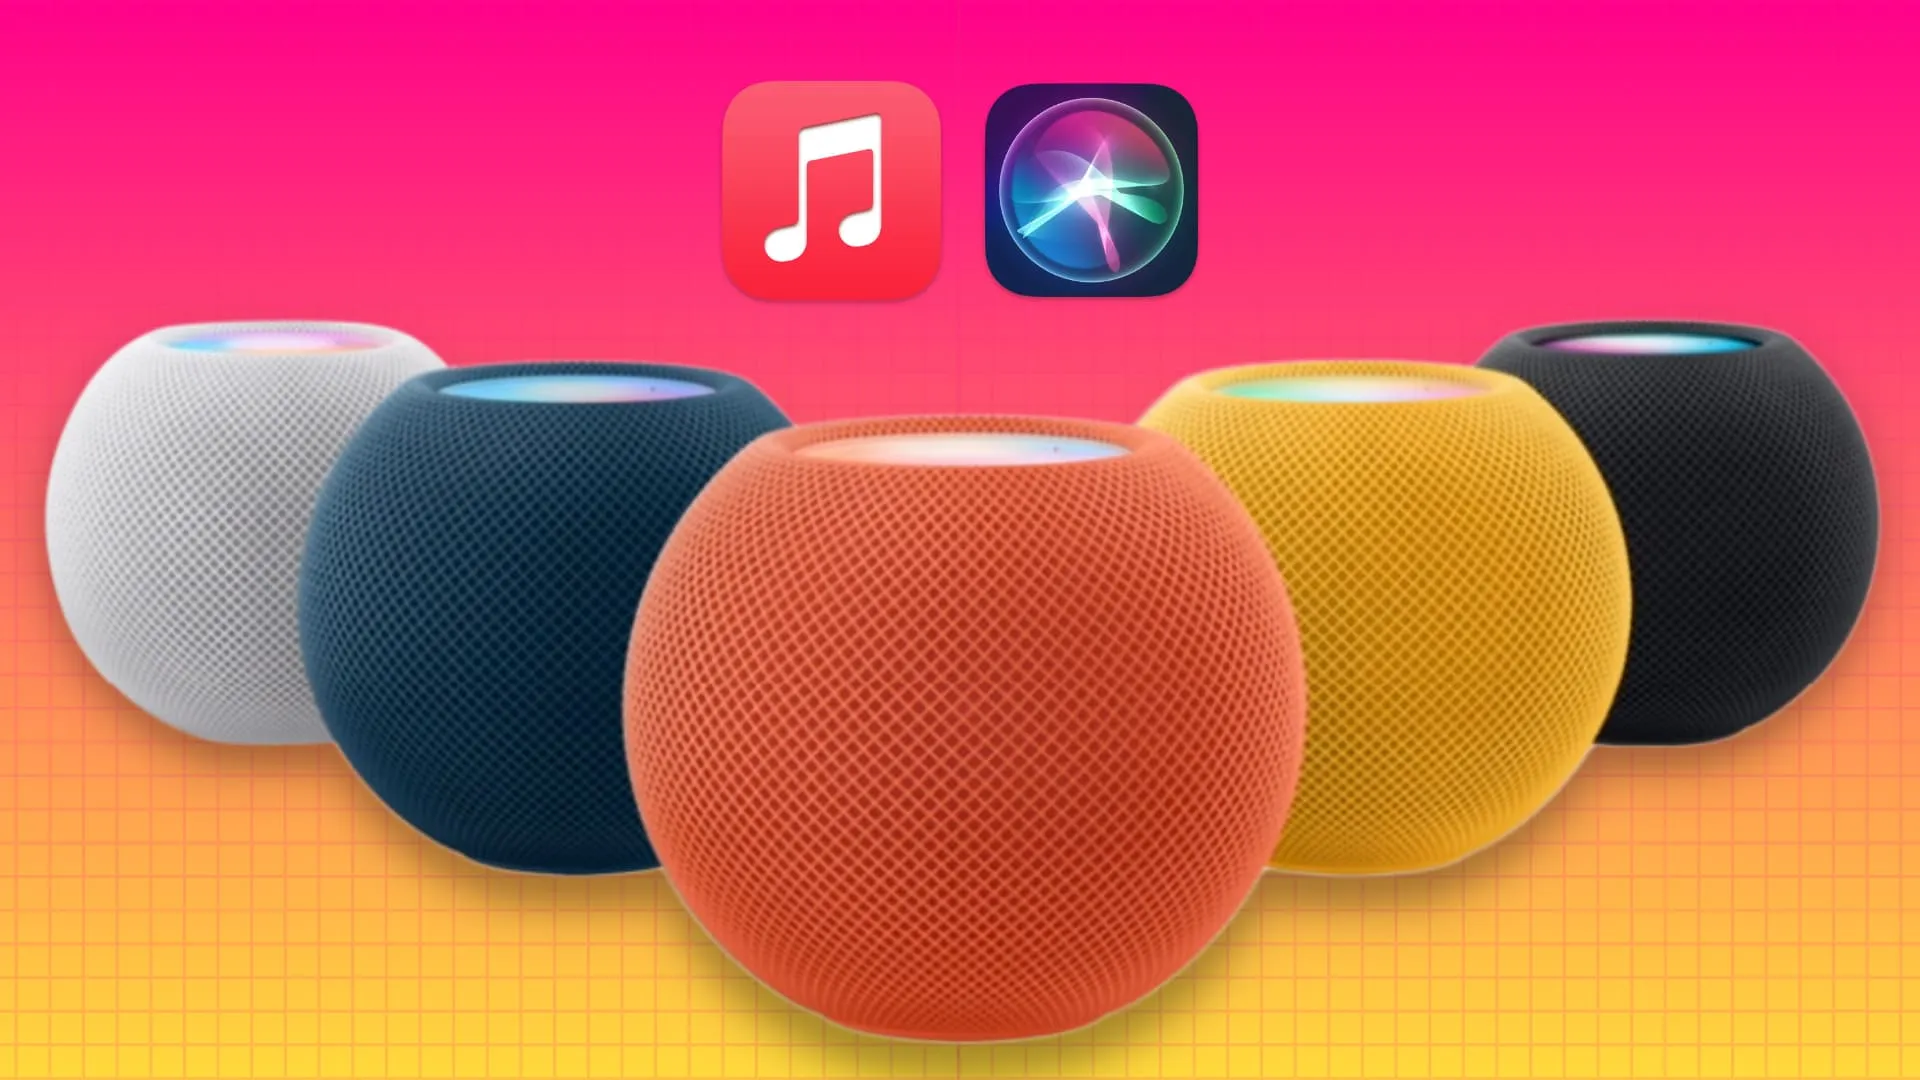 Пять HomePods mini разных цветов со значками Apple Music и Siri поверх них